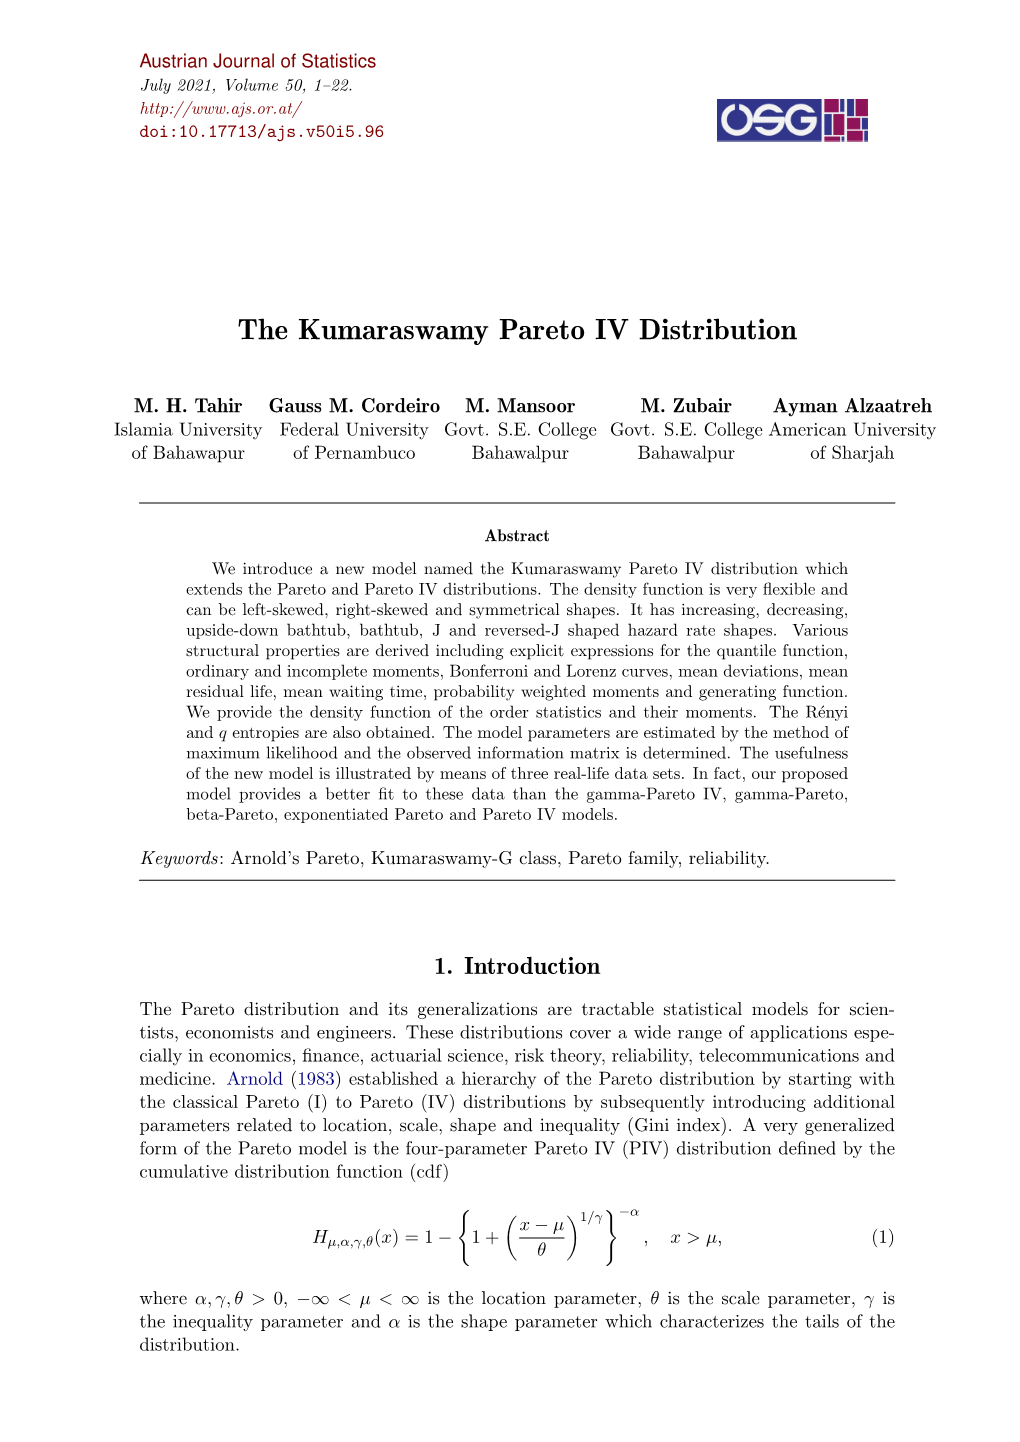 The Kumaraswamy Pareto IV Distribution